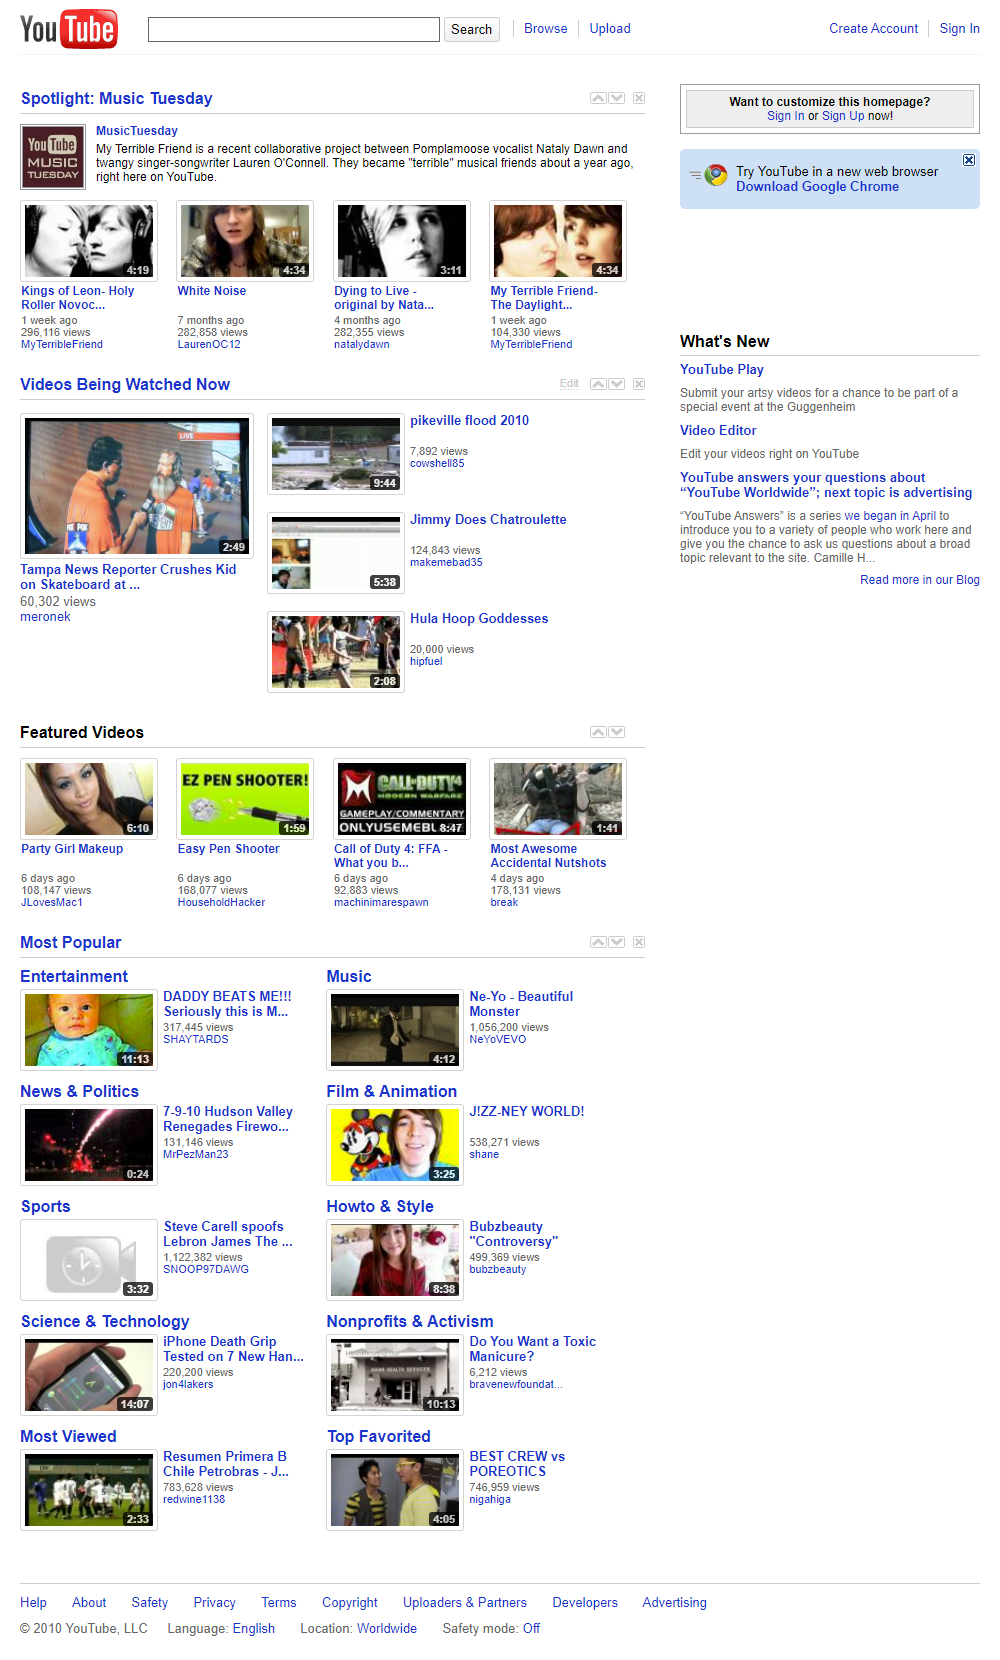 YouTube website in 2010